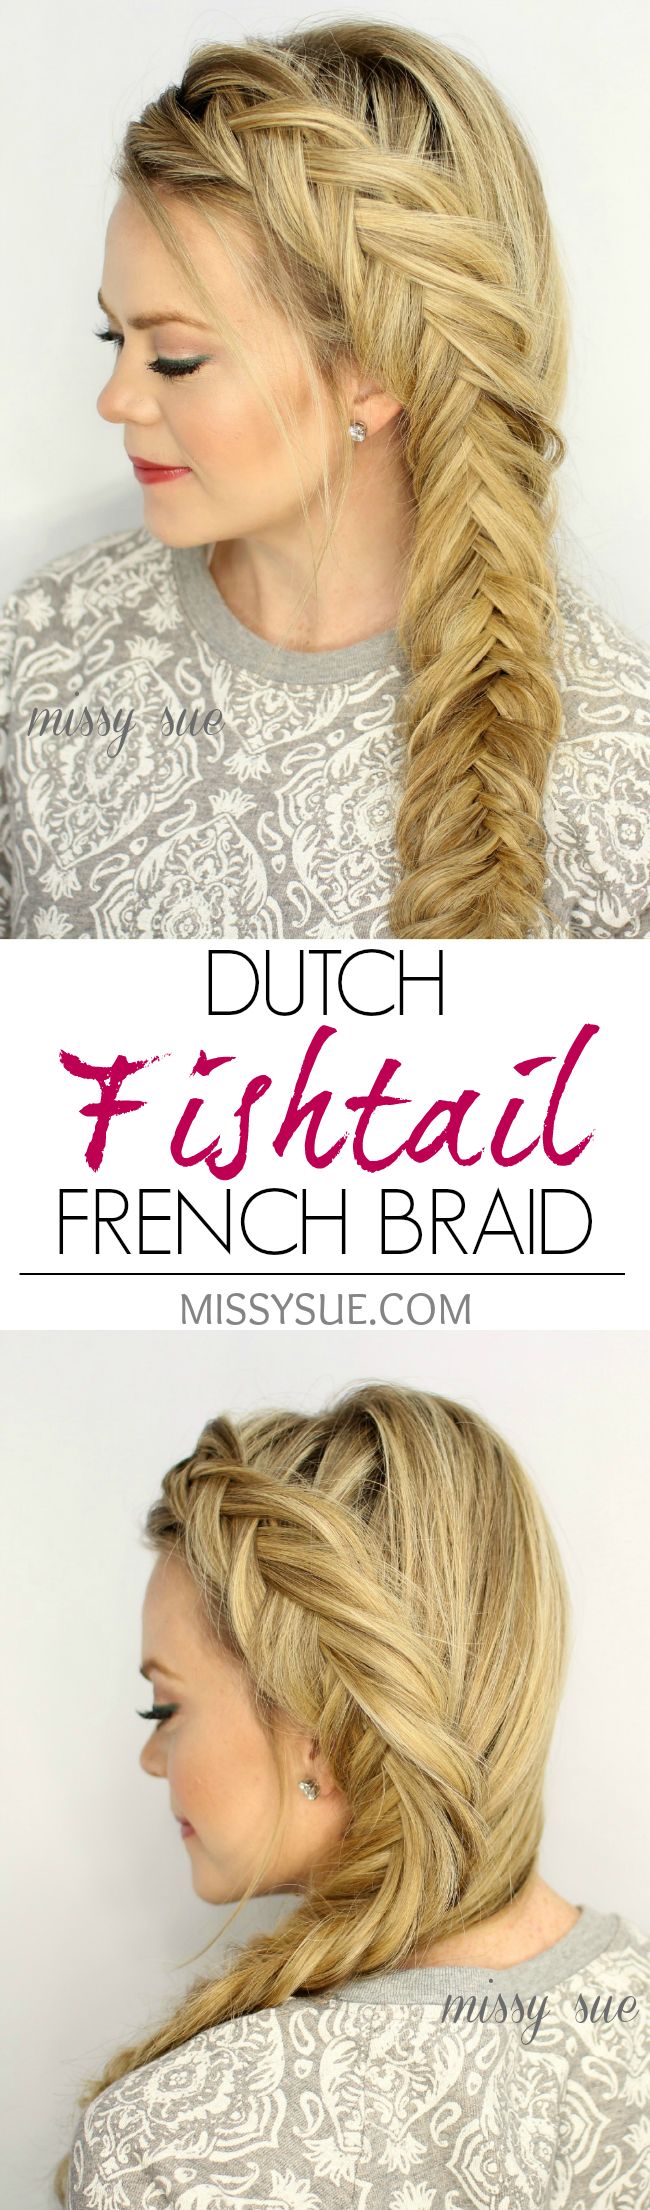 Fishtail French Braid